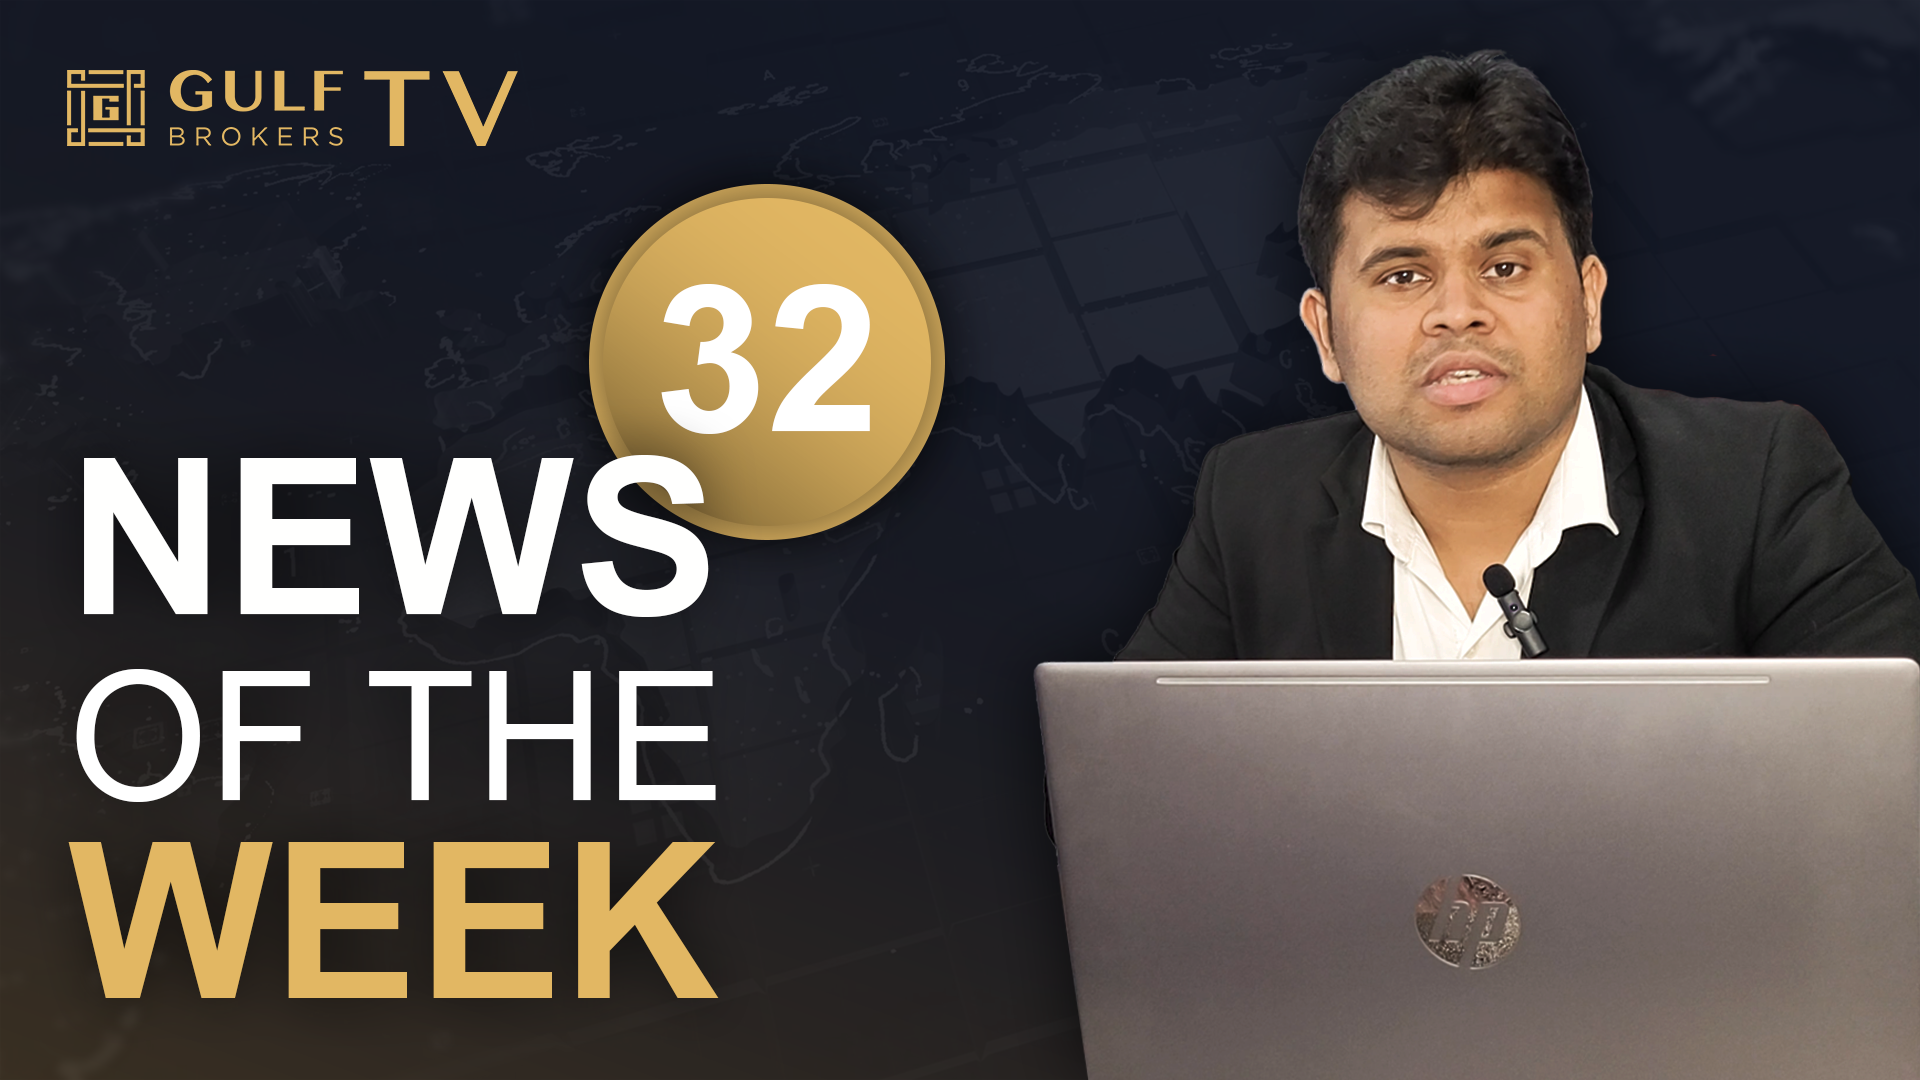 Gulfbrokers | Gulf Brokers | News of the week 32 | Syam KP